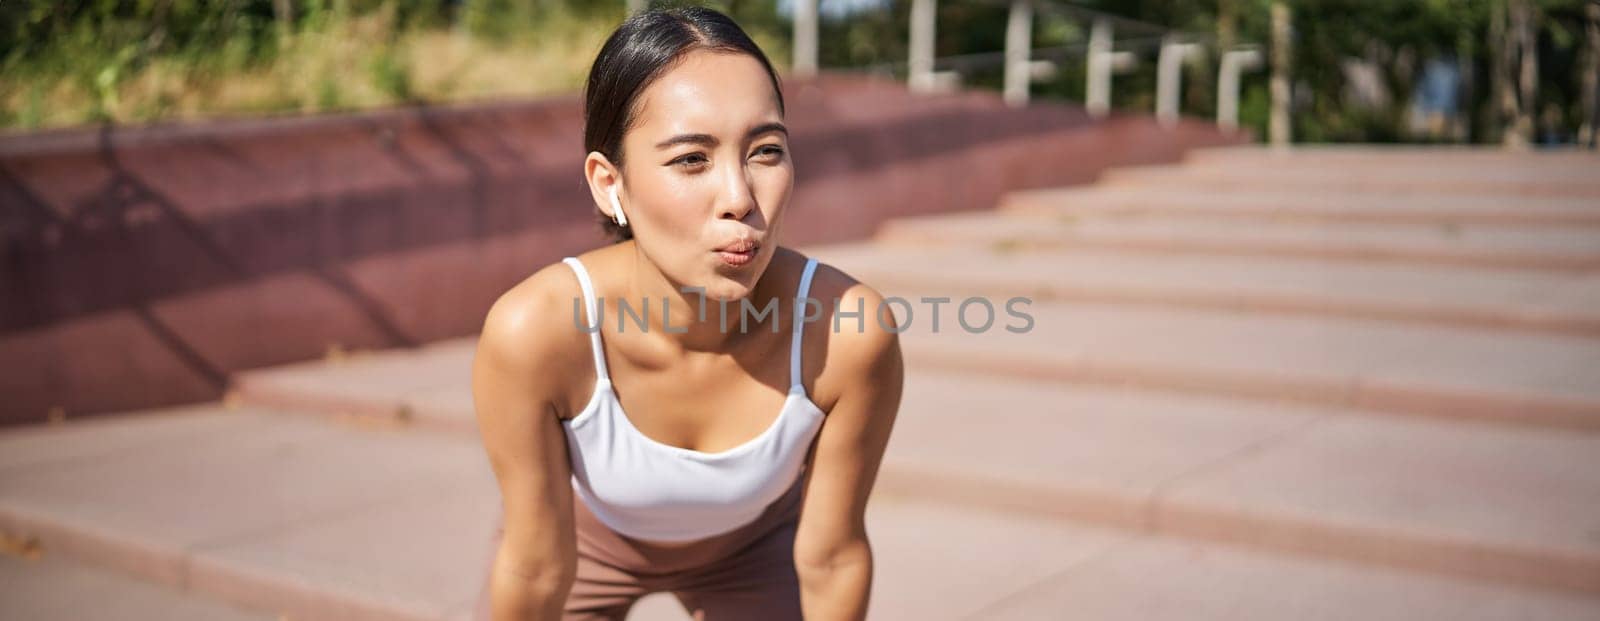 Portrait of sportswoman panting, taking break during jogging training, sweating while running outdoors.